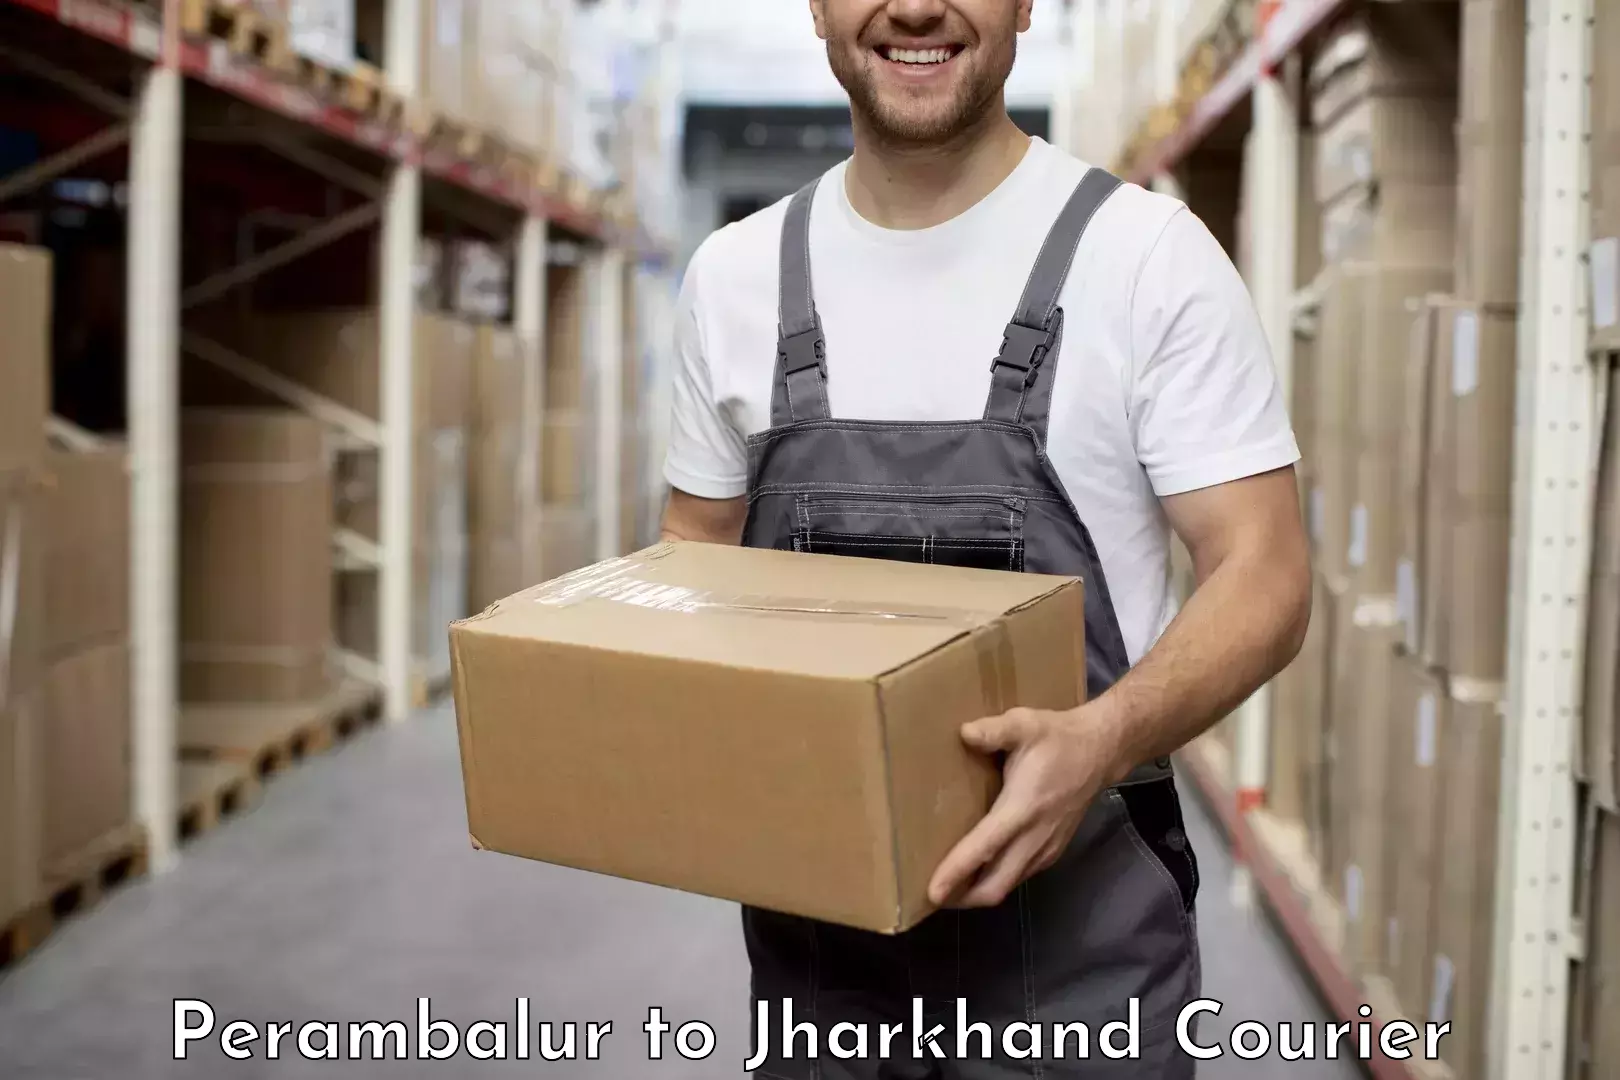 Doorstep delivery service Perambalur to Dhanbad